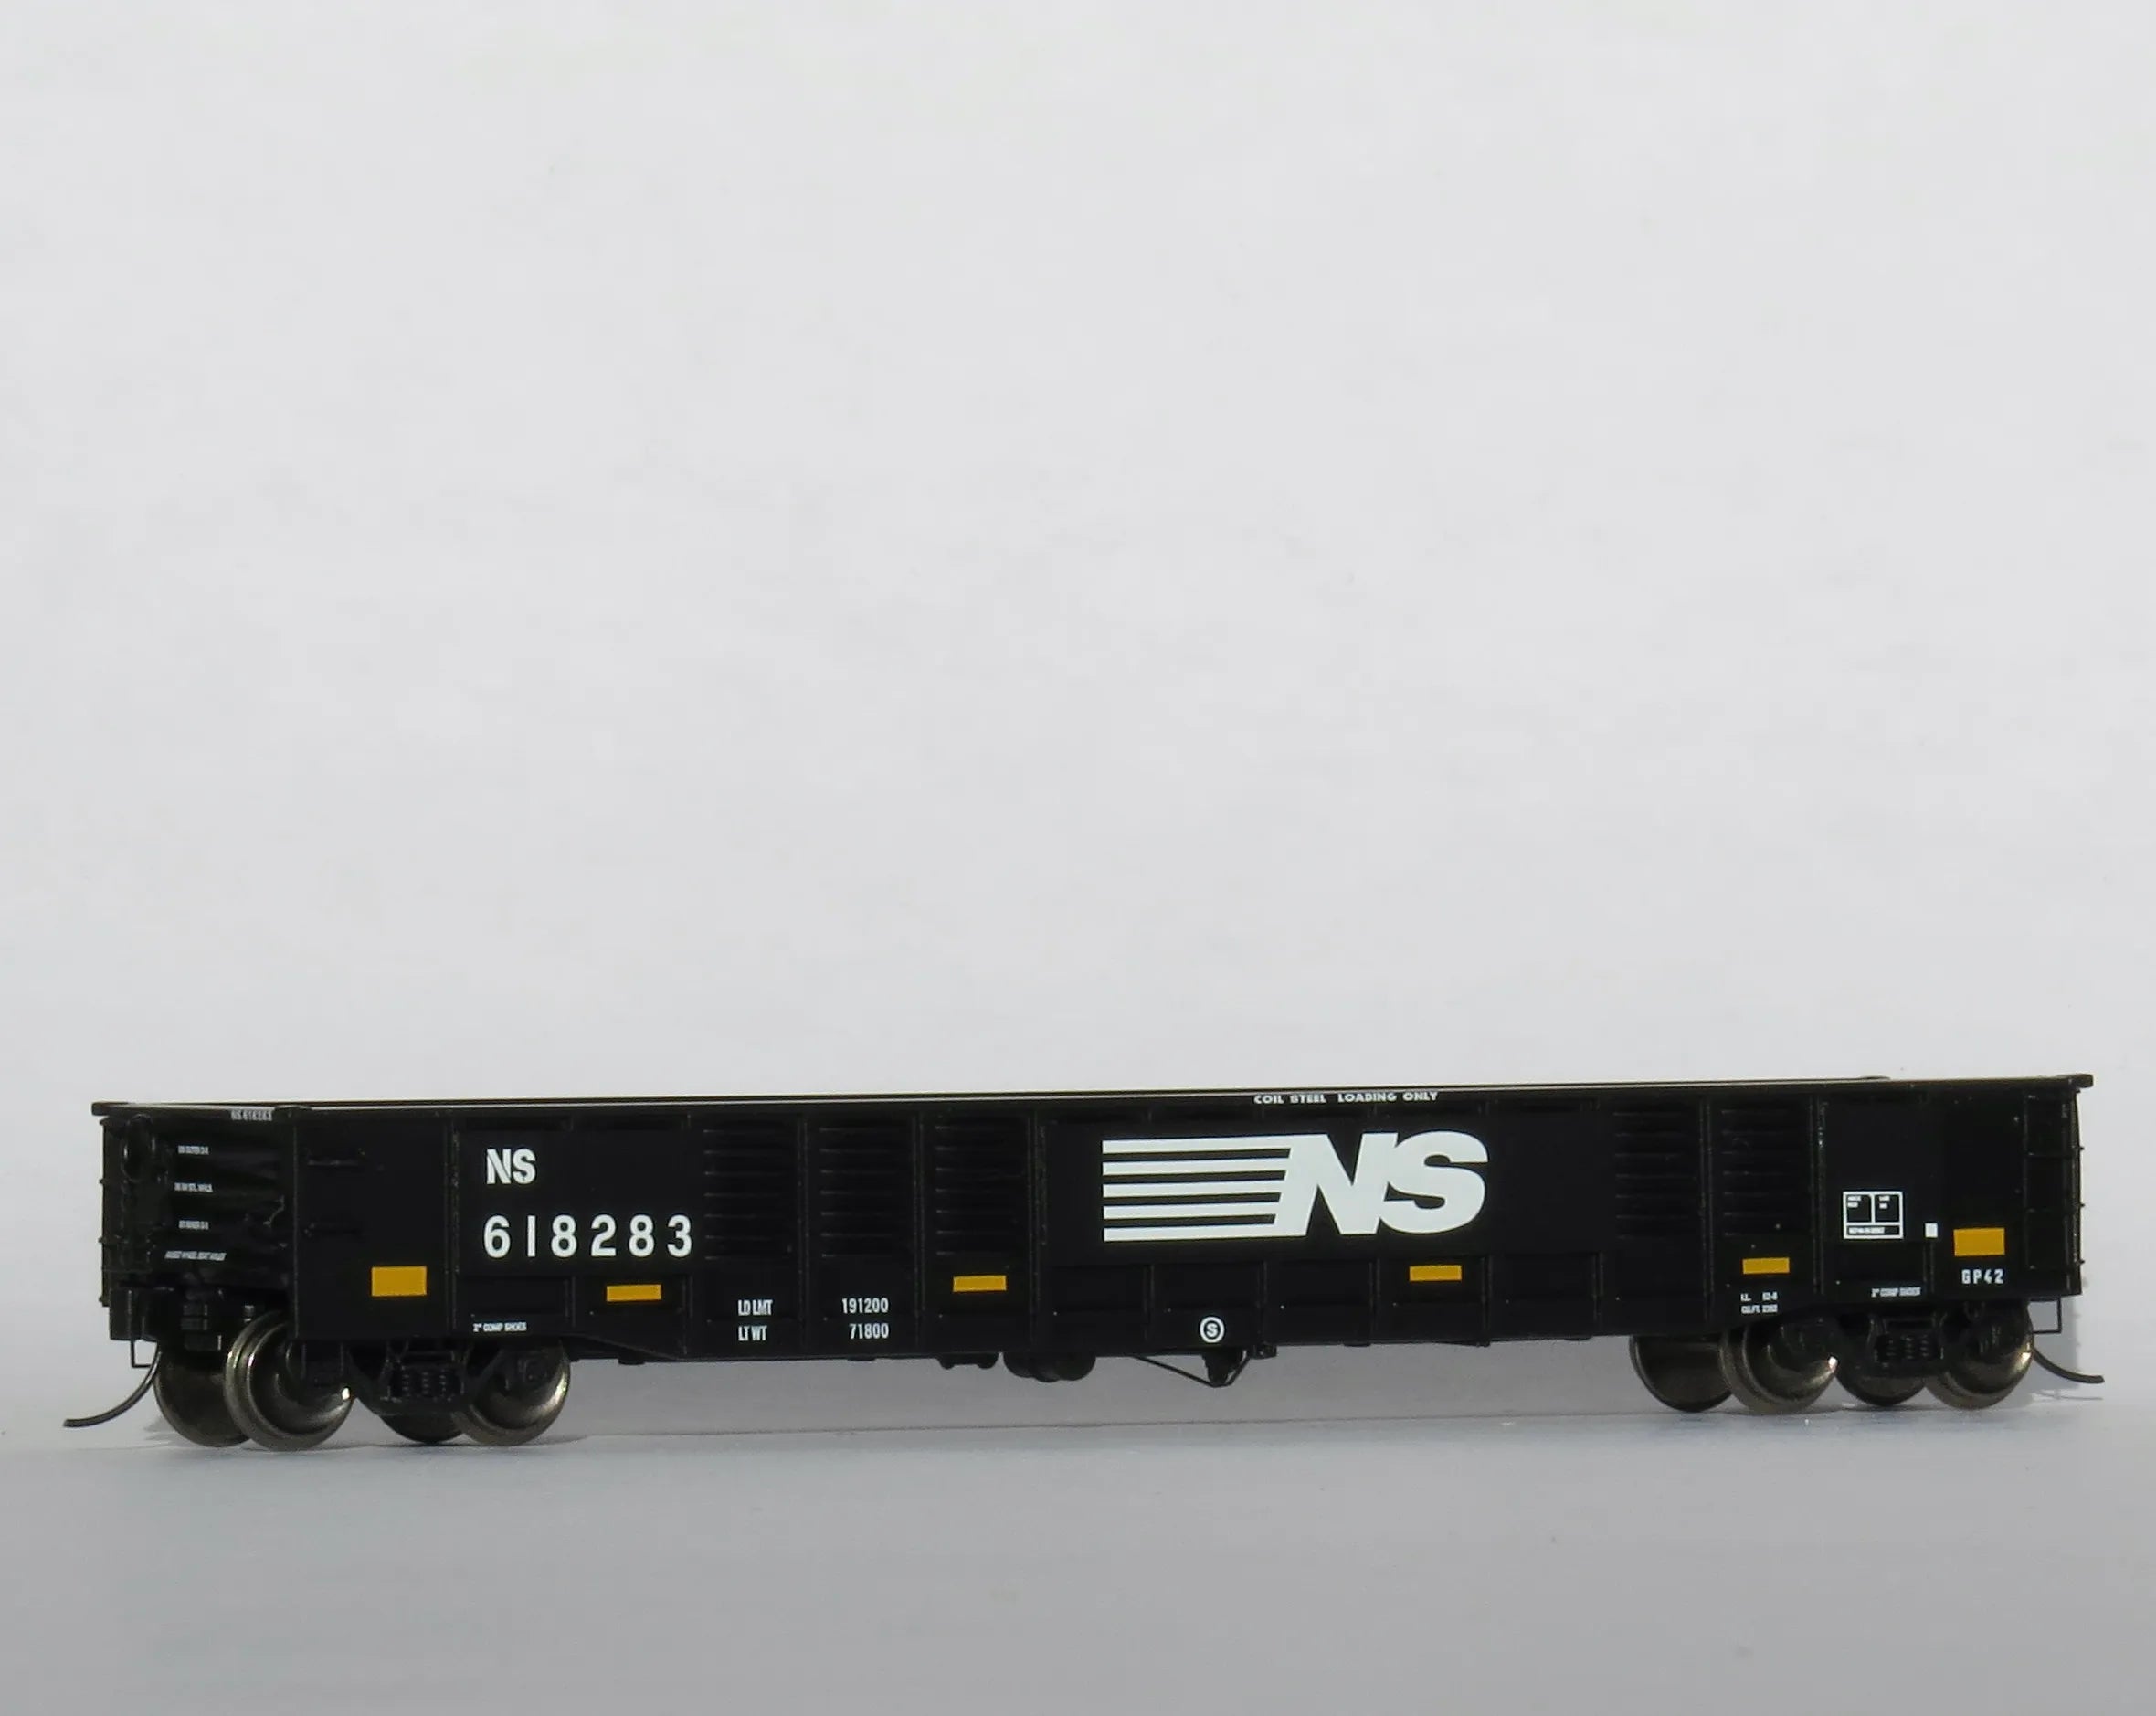 Trainworx 2521312 N Scale, 52' Gondola, Norfolk Southern #618283